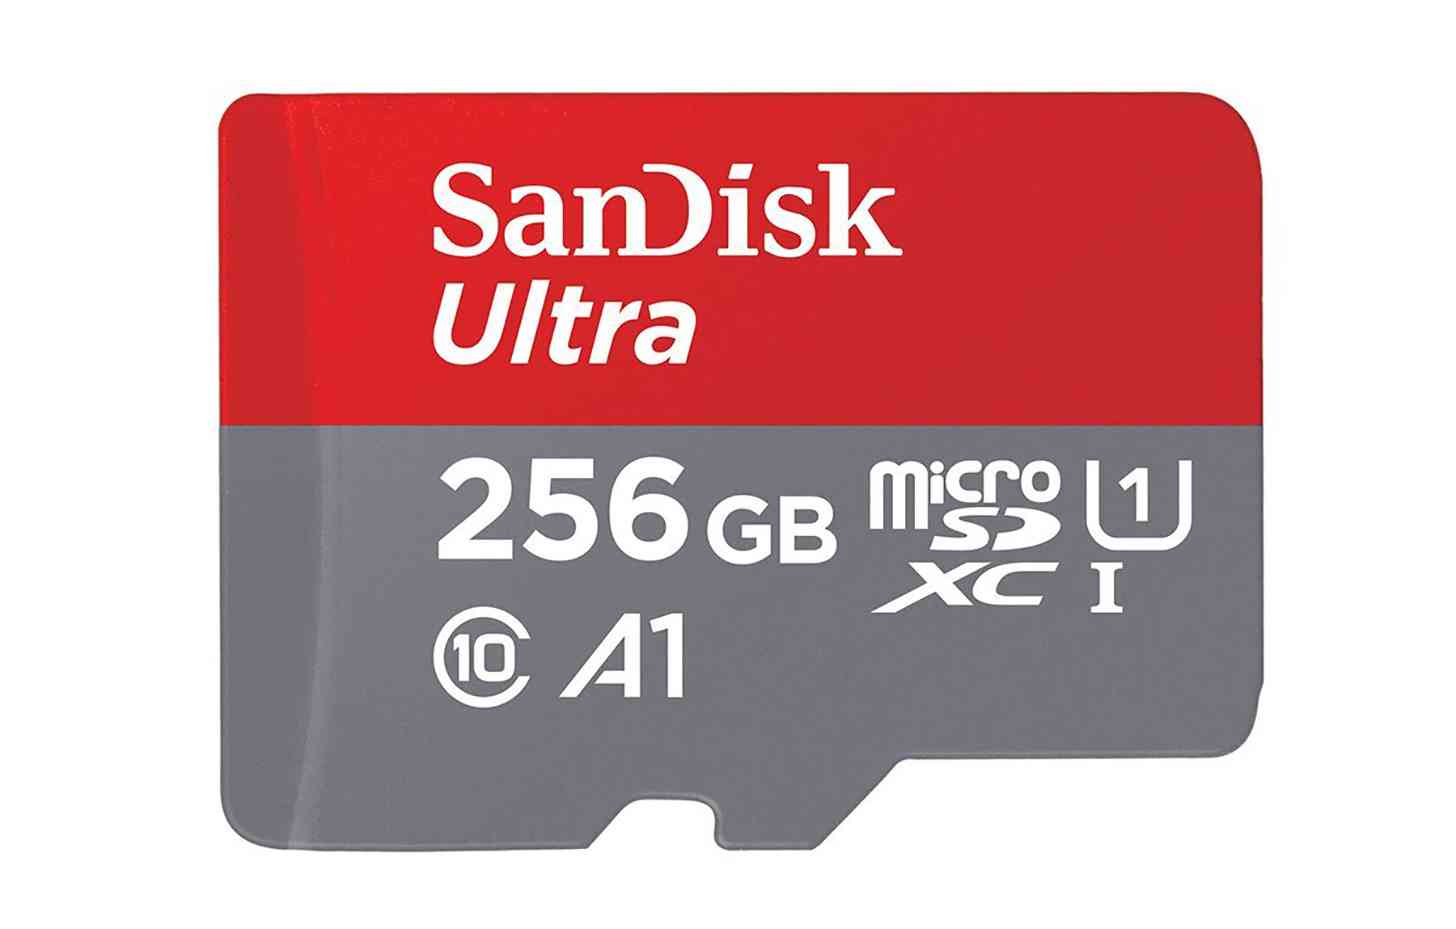 SanDisk 256GB microSD card official